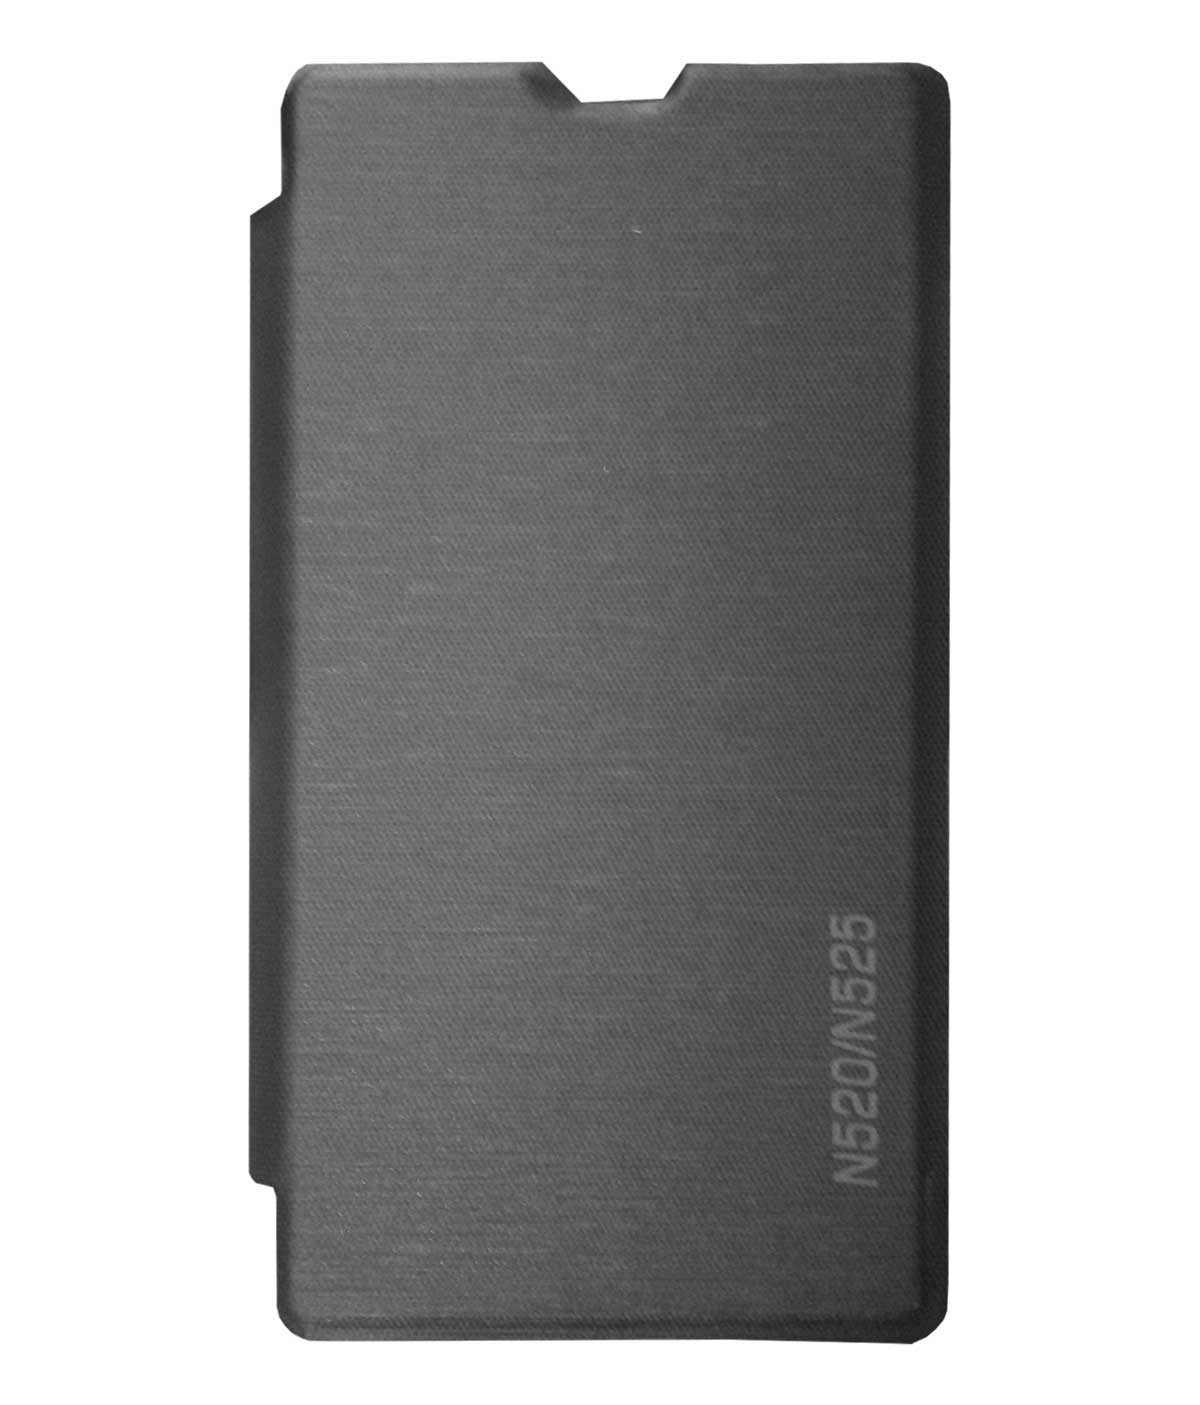 TBZ Flip Cover Case for Nokia Lumia 520/525  Black